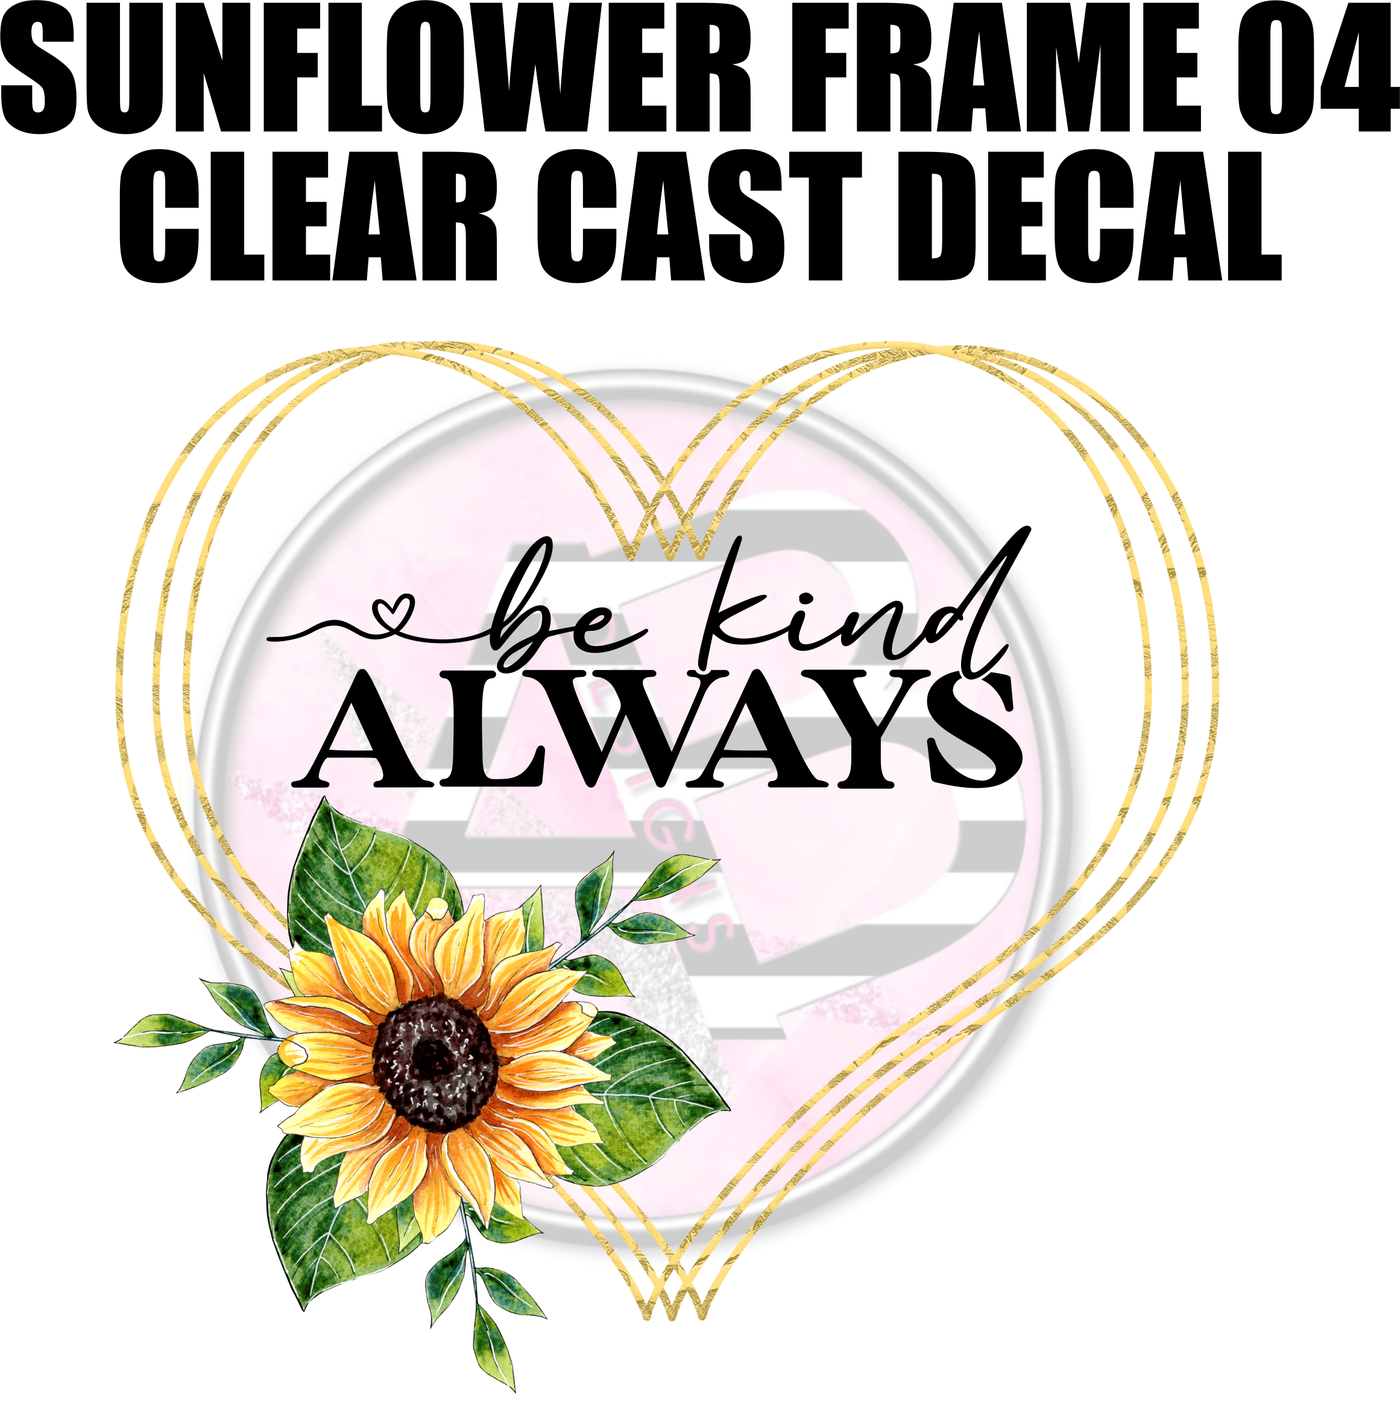 Sunflower Frame 04 - Clear Cast Decal